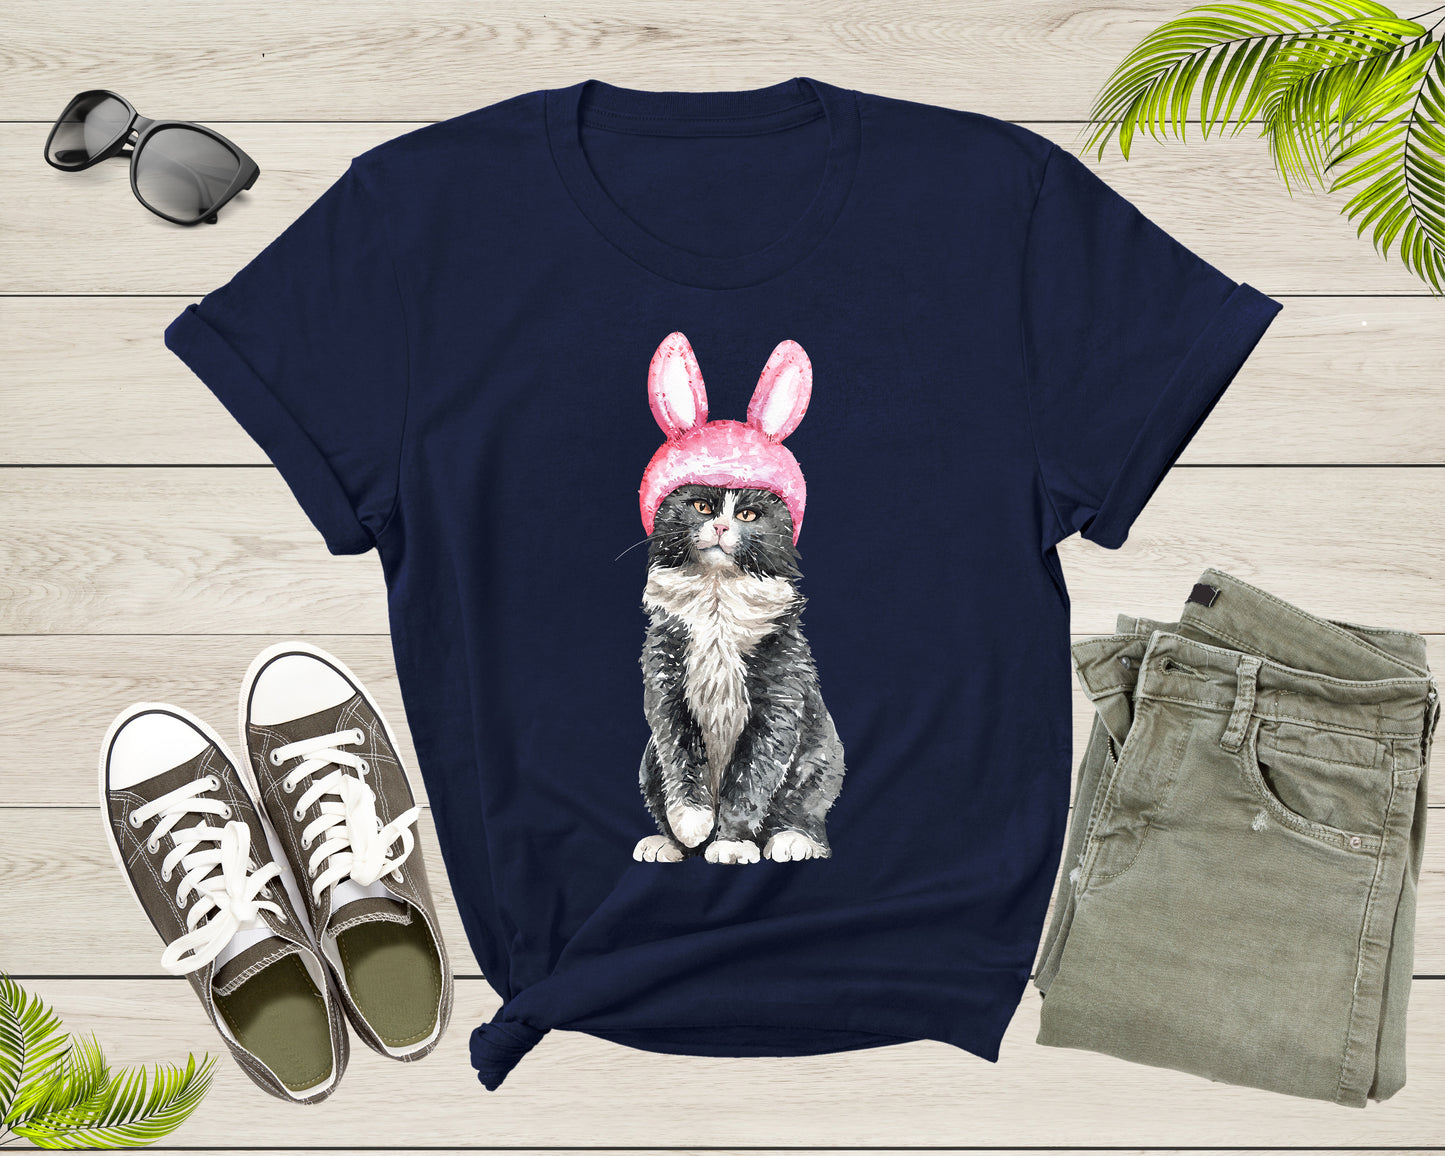 Cute Kitty Cat with Easter Bunny Ears Hat for Men Women Kids T-Shirt Cat Lover Gift T Shirt for Men Women Kids Boys Girls Graphic Tshirt